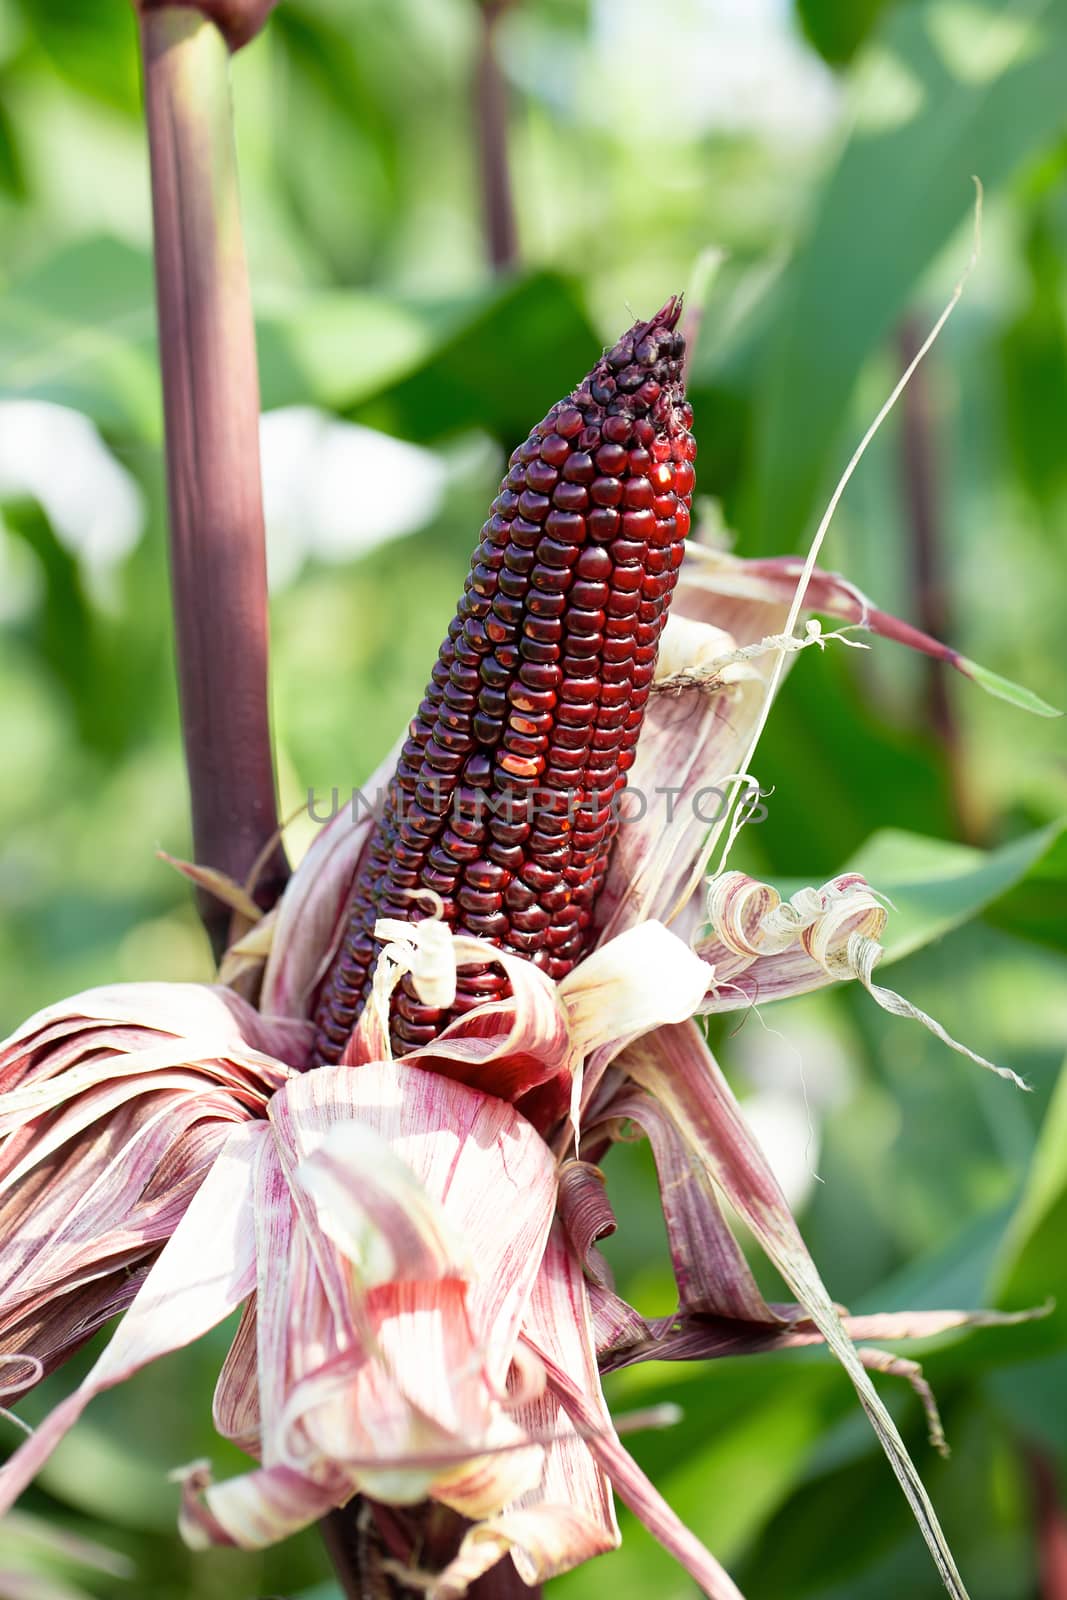 red sweet corns in green leaves on a farm field.